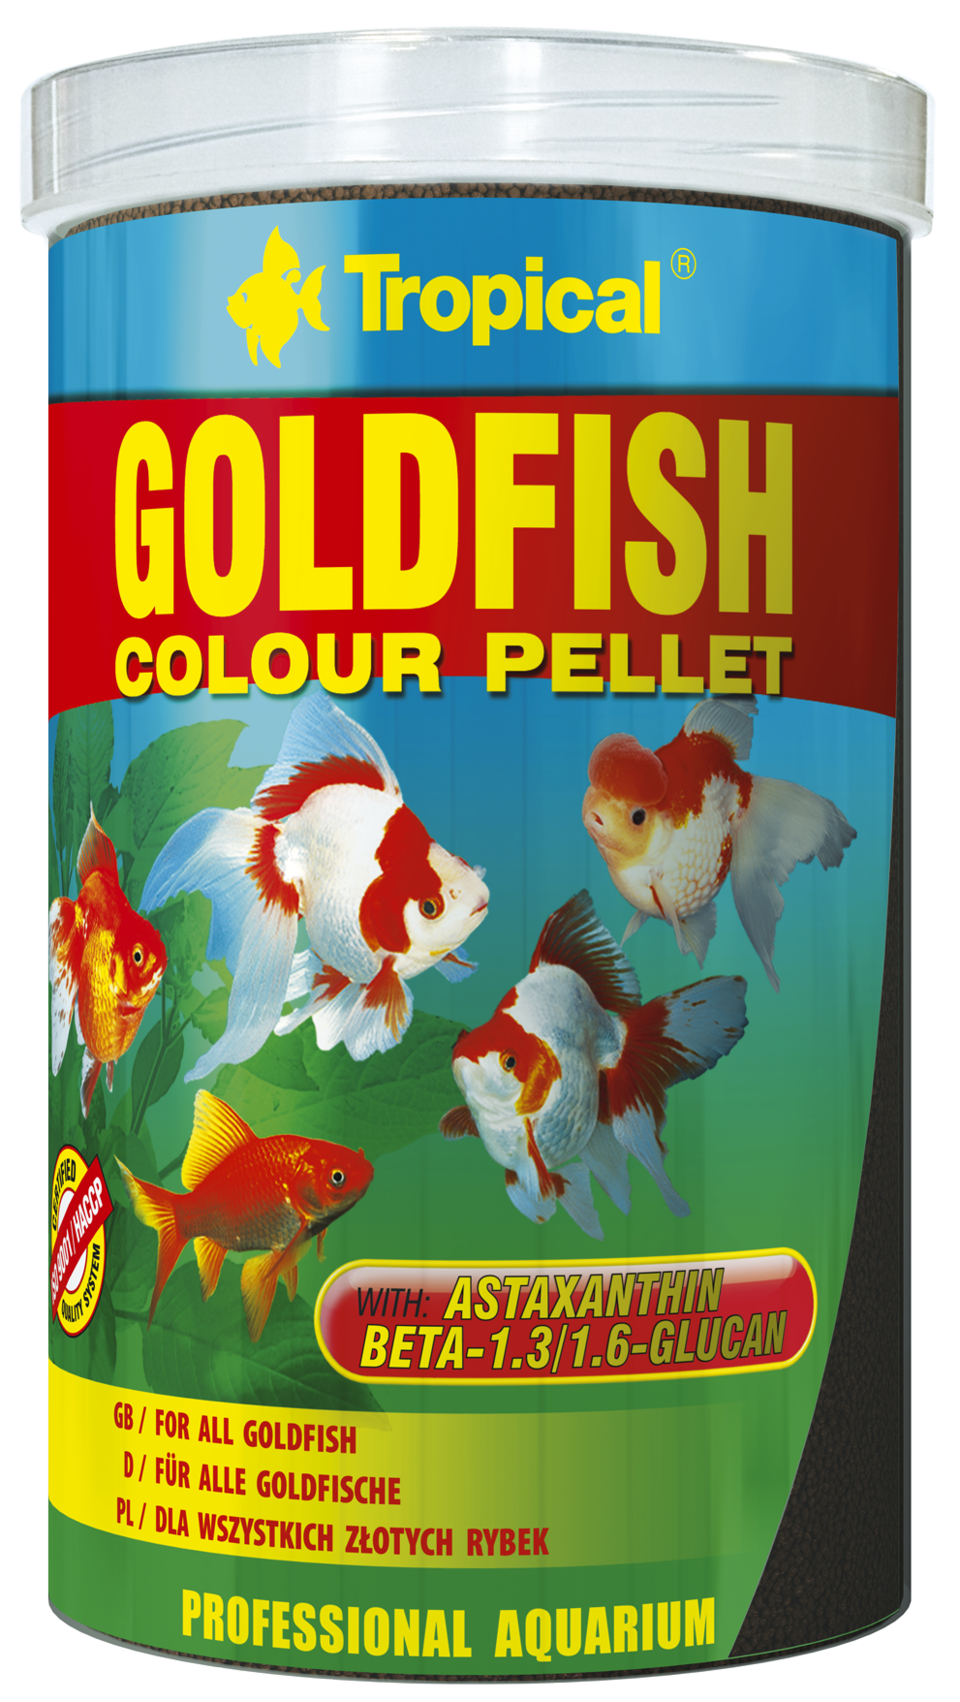 csm_goldfish-golour-pellet_1000_5554252e6d